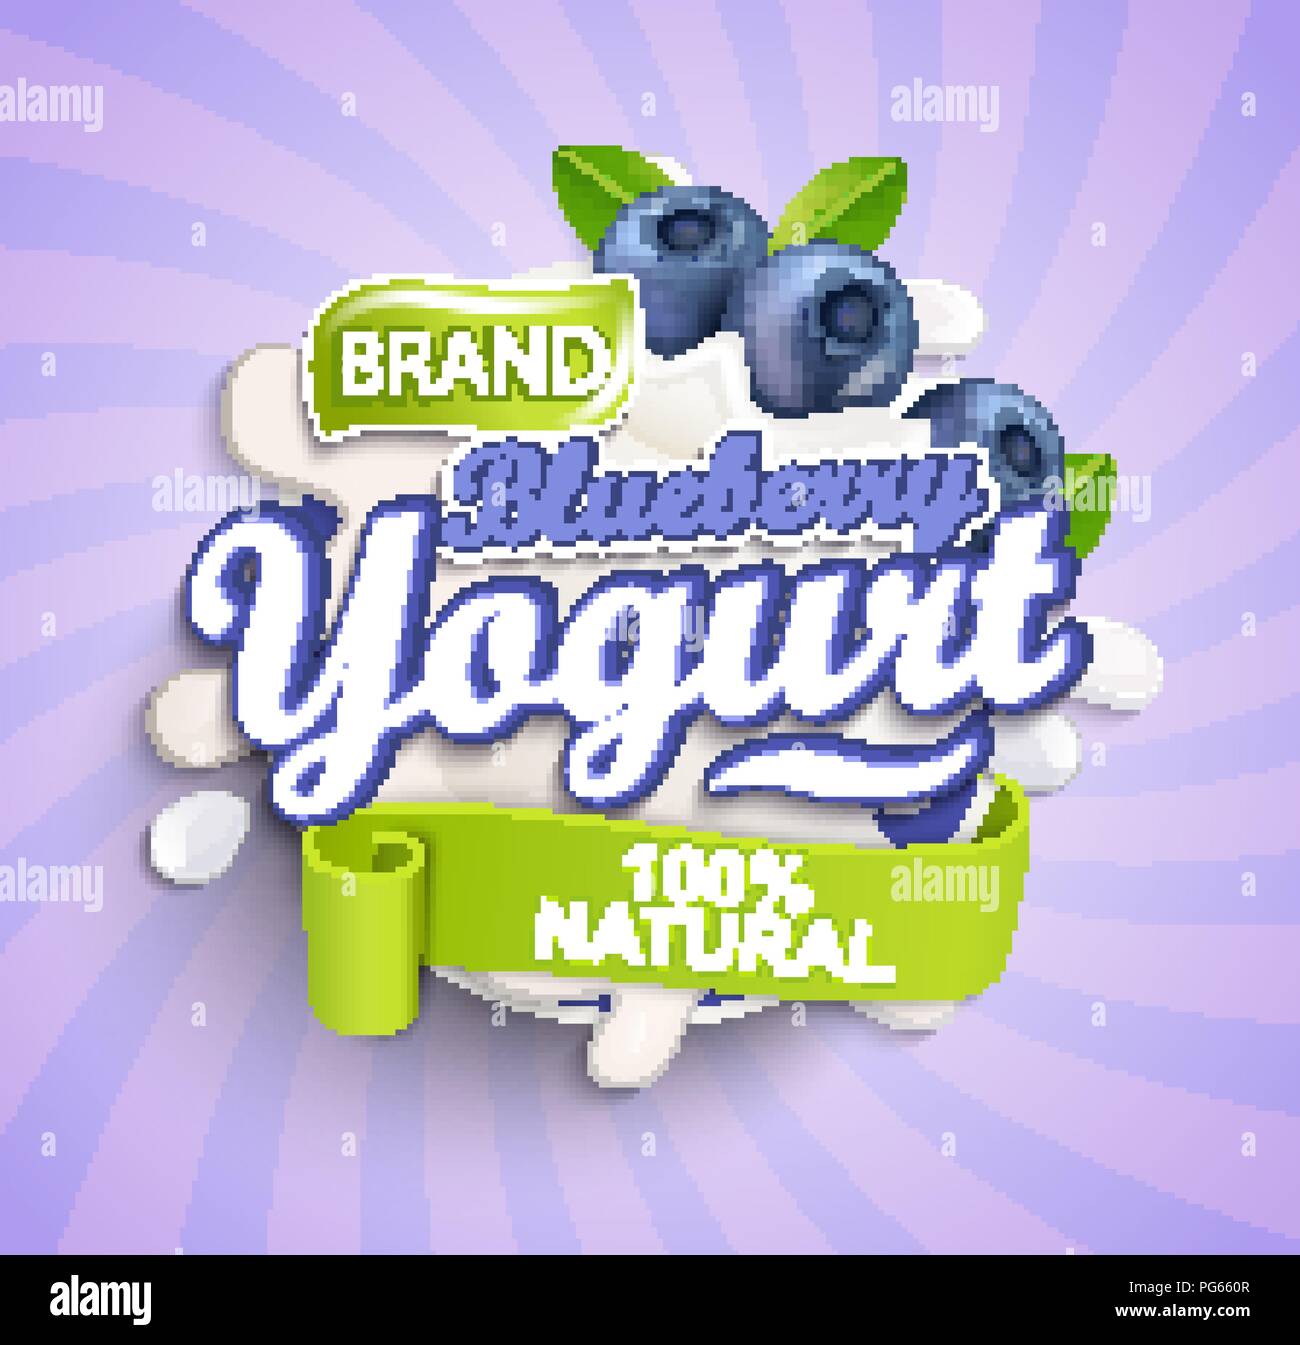 Natural and fresh Blueberry Yogurt label splash on sunburst background for your brand, logo, template, label, emblem for groceries, agriculture stores, packaging and advertising. Vector illustration. Stock Vector